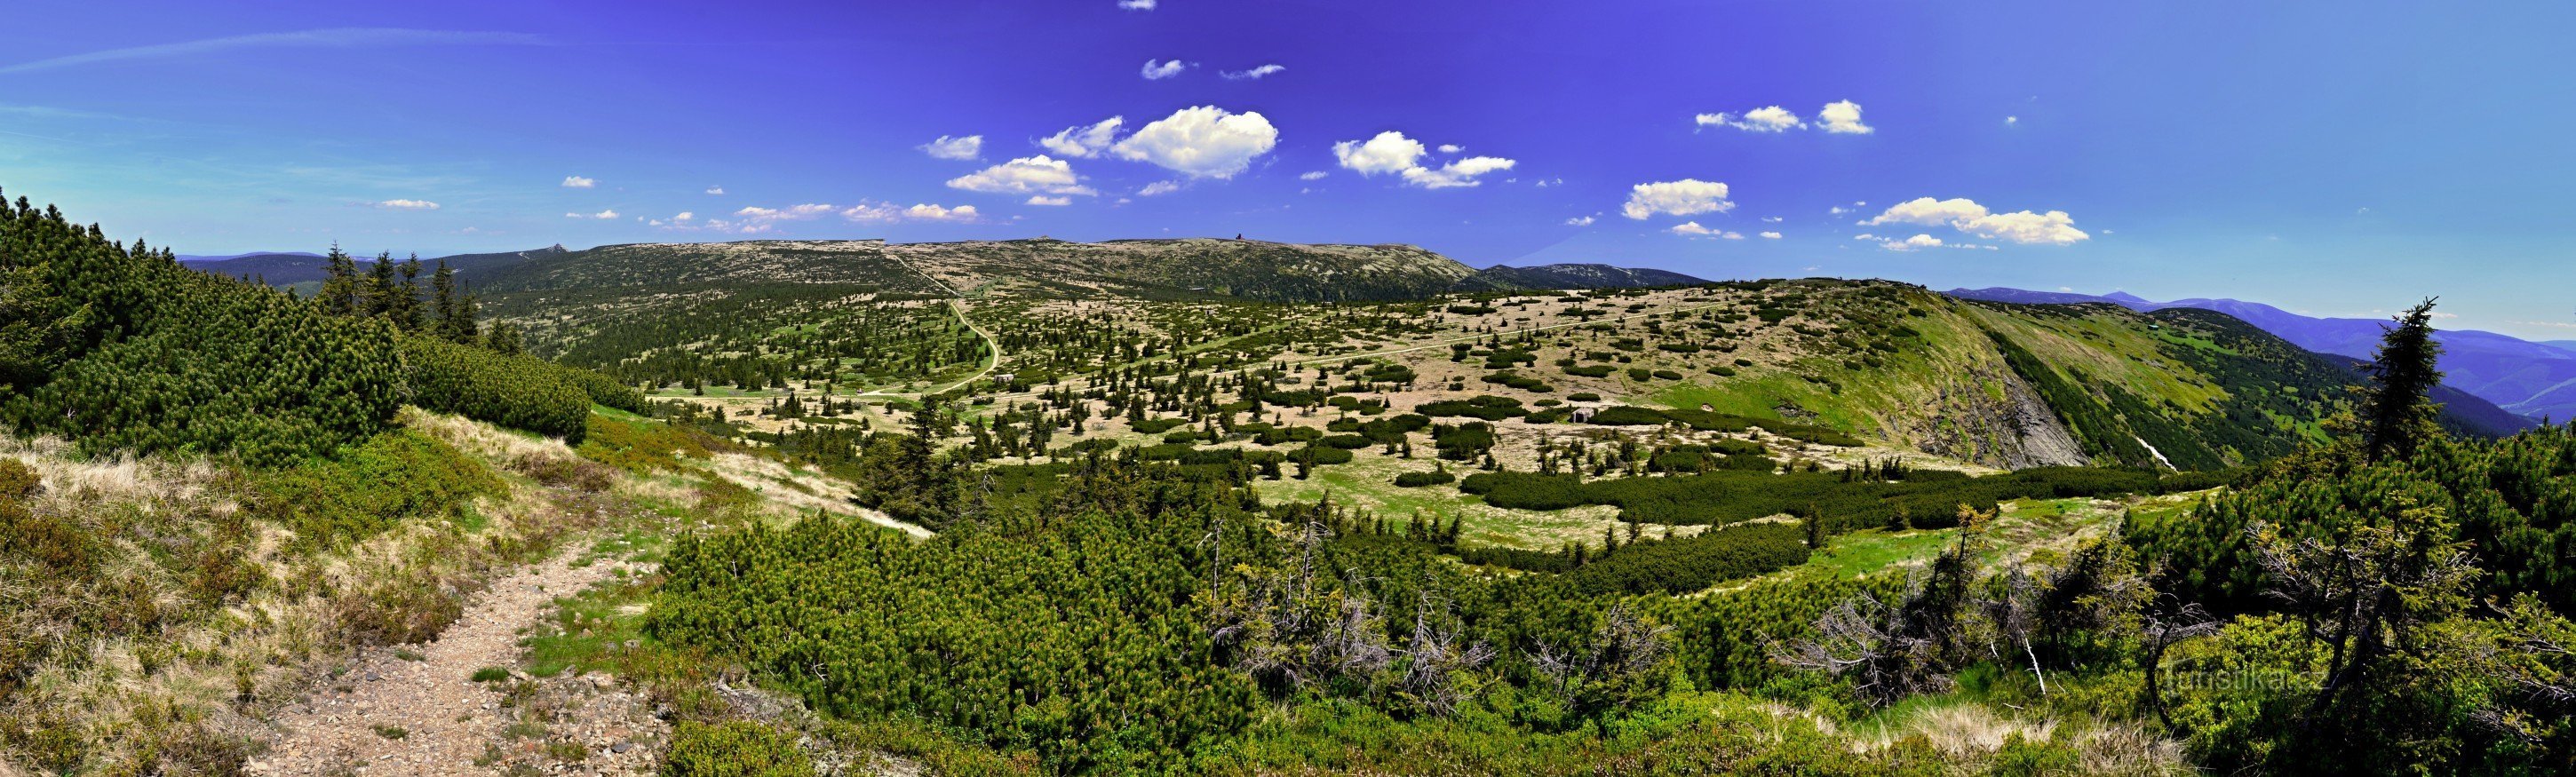 Krkonoše: panorama of Krkonoše from Kotle